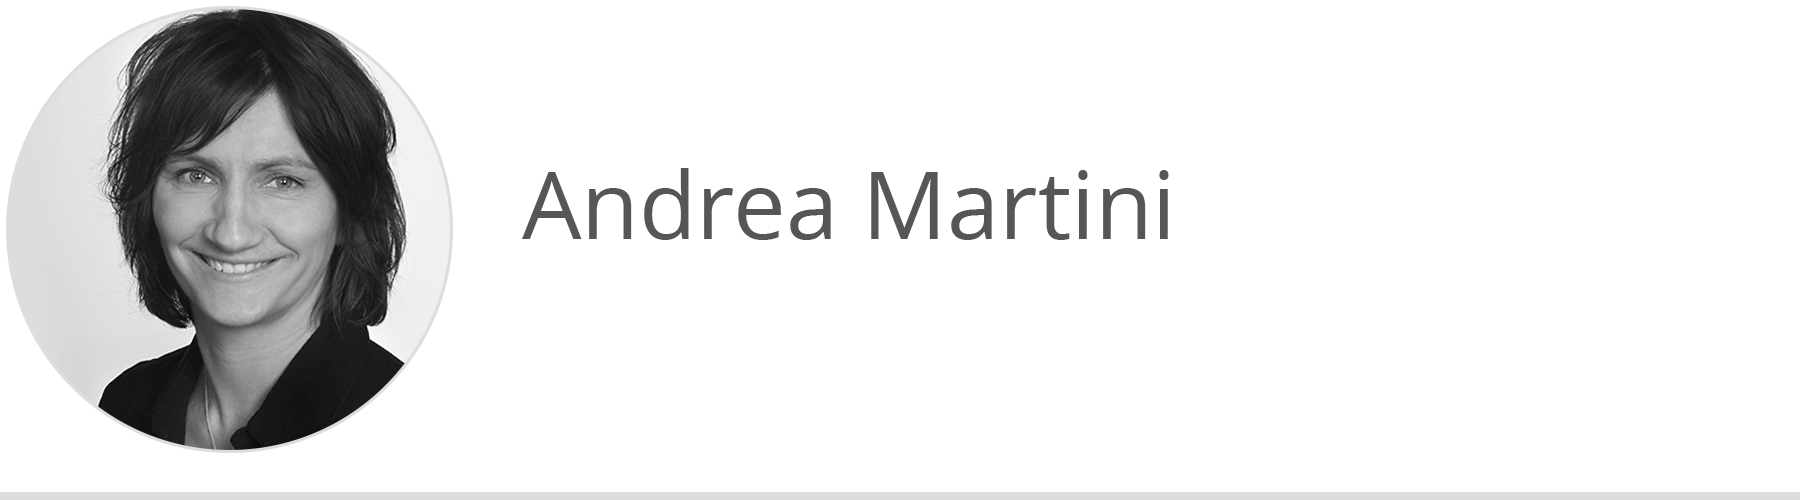 Pressekontakt Andrea Martini